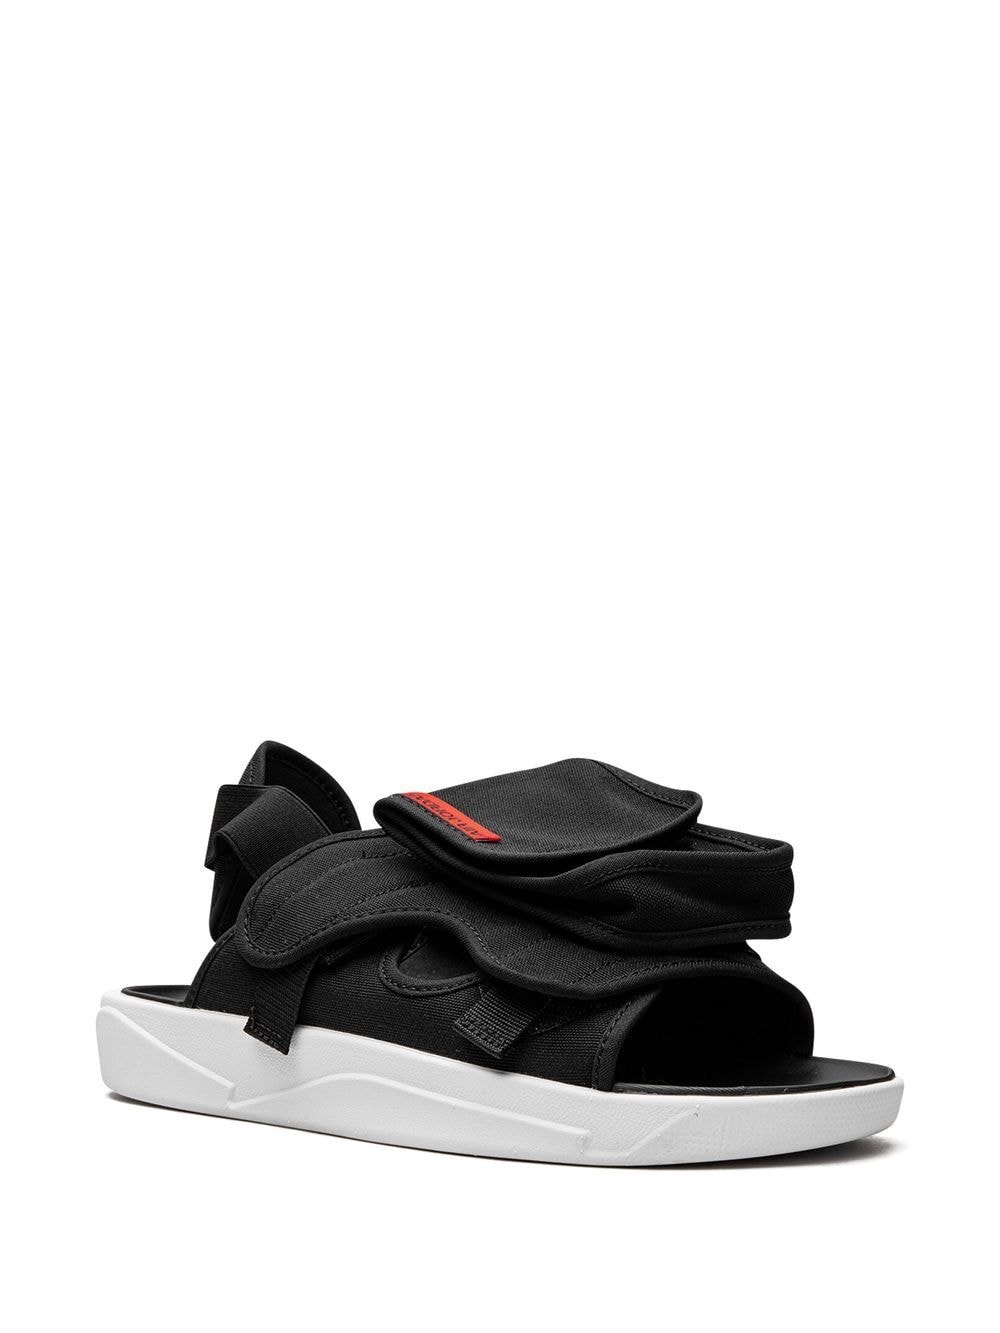 Shop Jordan Ls "black/white" Slides